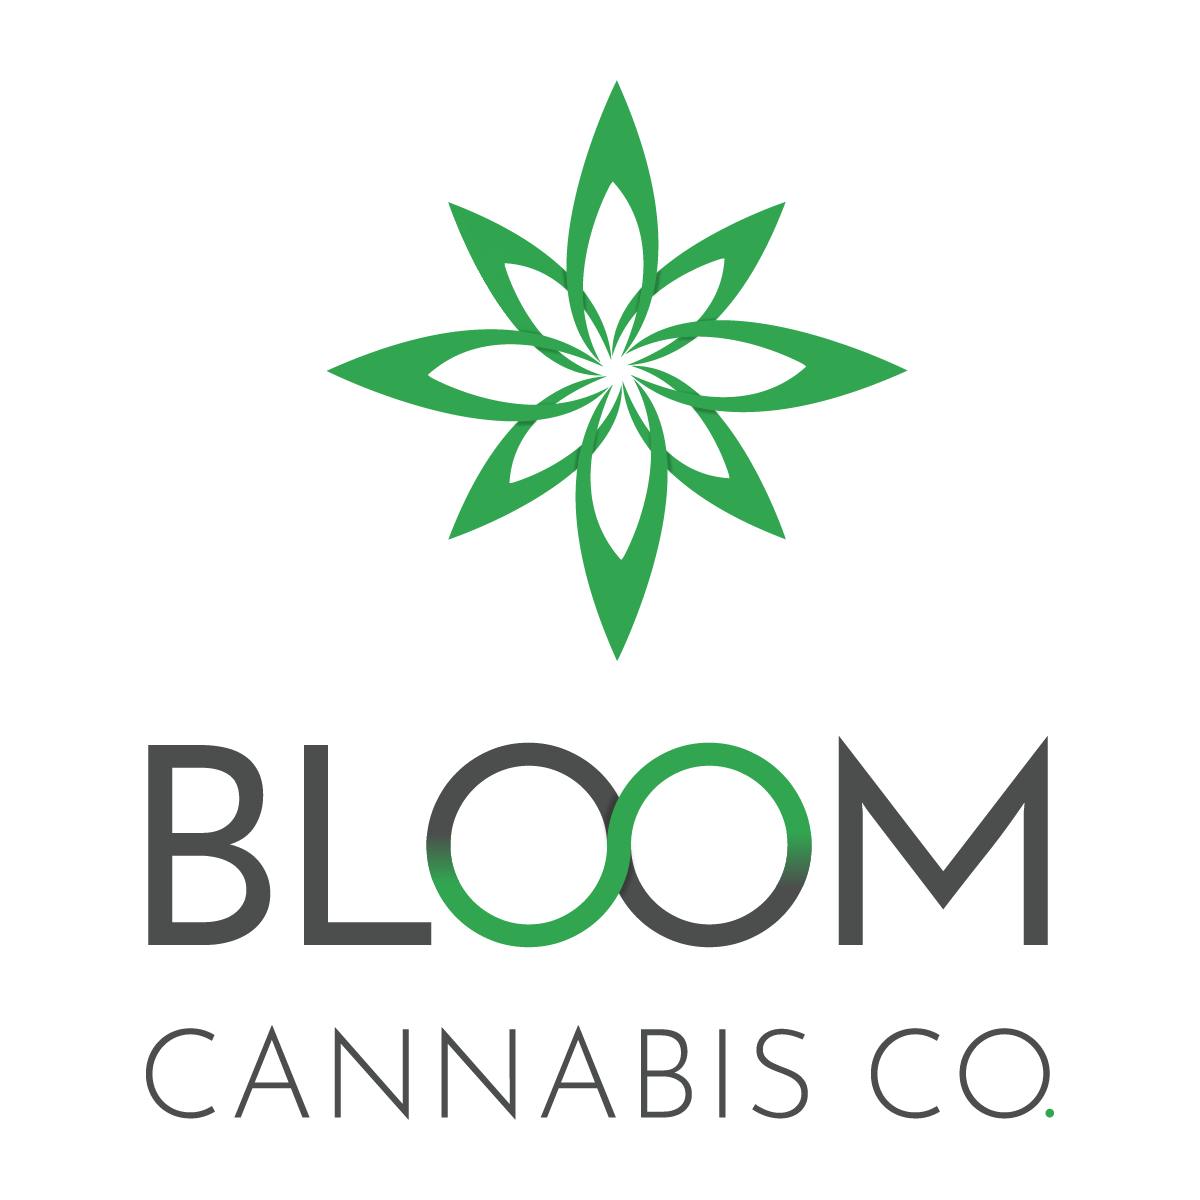 BLOOM Cannabis Co. - Marijuana & Cannabis Dispensary in Midwest City